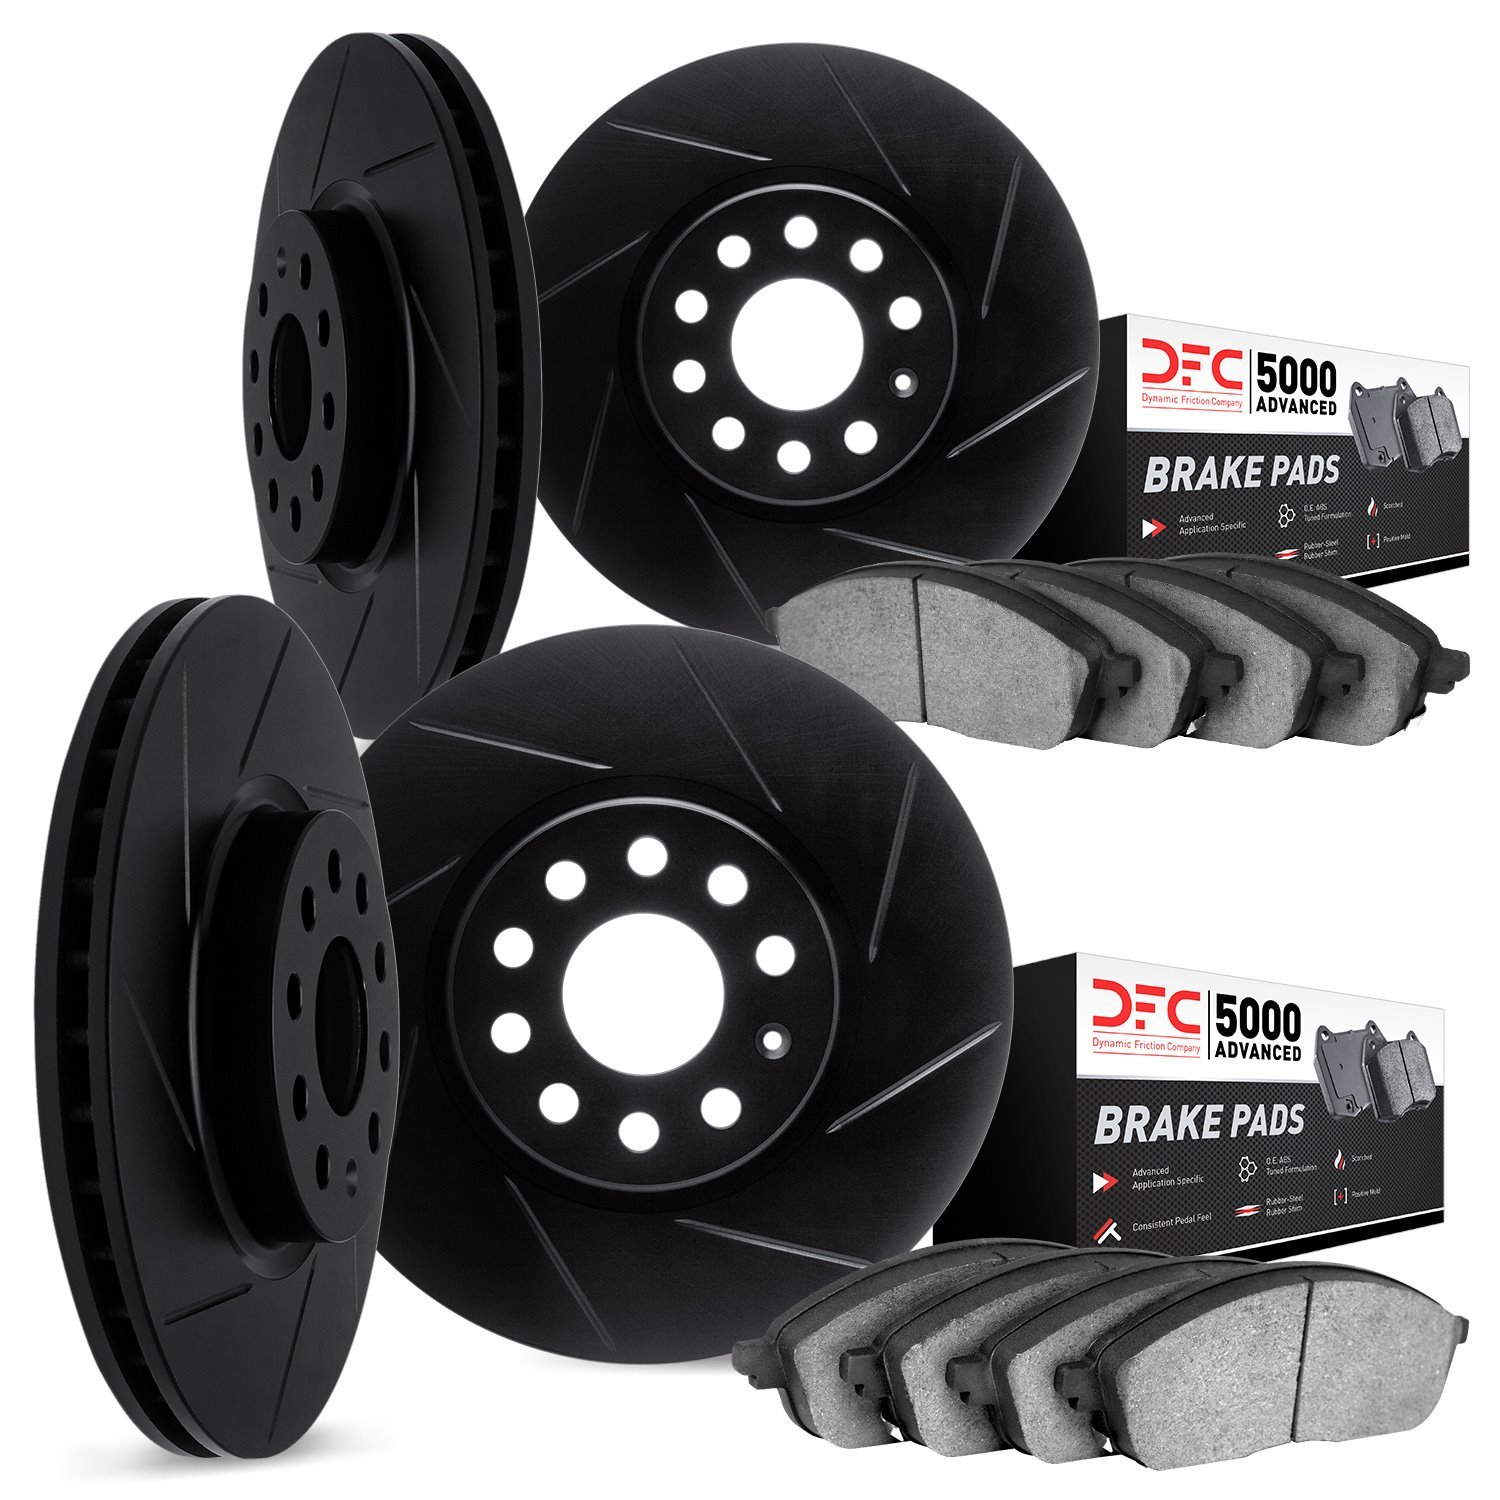 3514-67056 Slotted Brake Rotors w/5000 Advanced Brake Pads Kit & Hardware [Black], 2003-2011 Infiniti/Nissan, Position: Front an